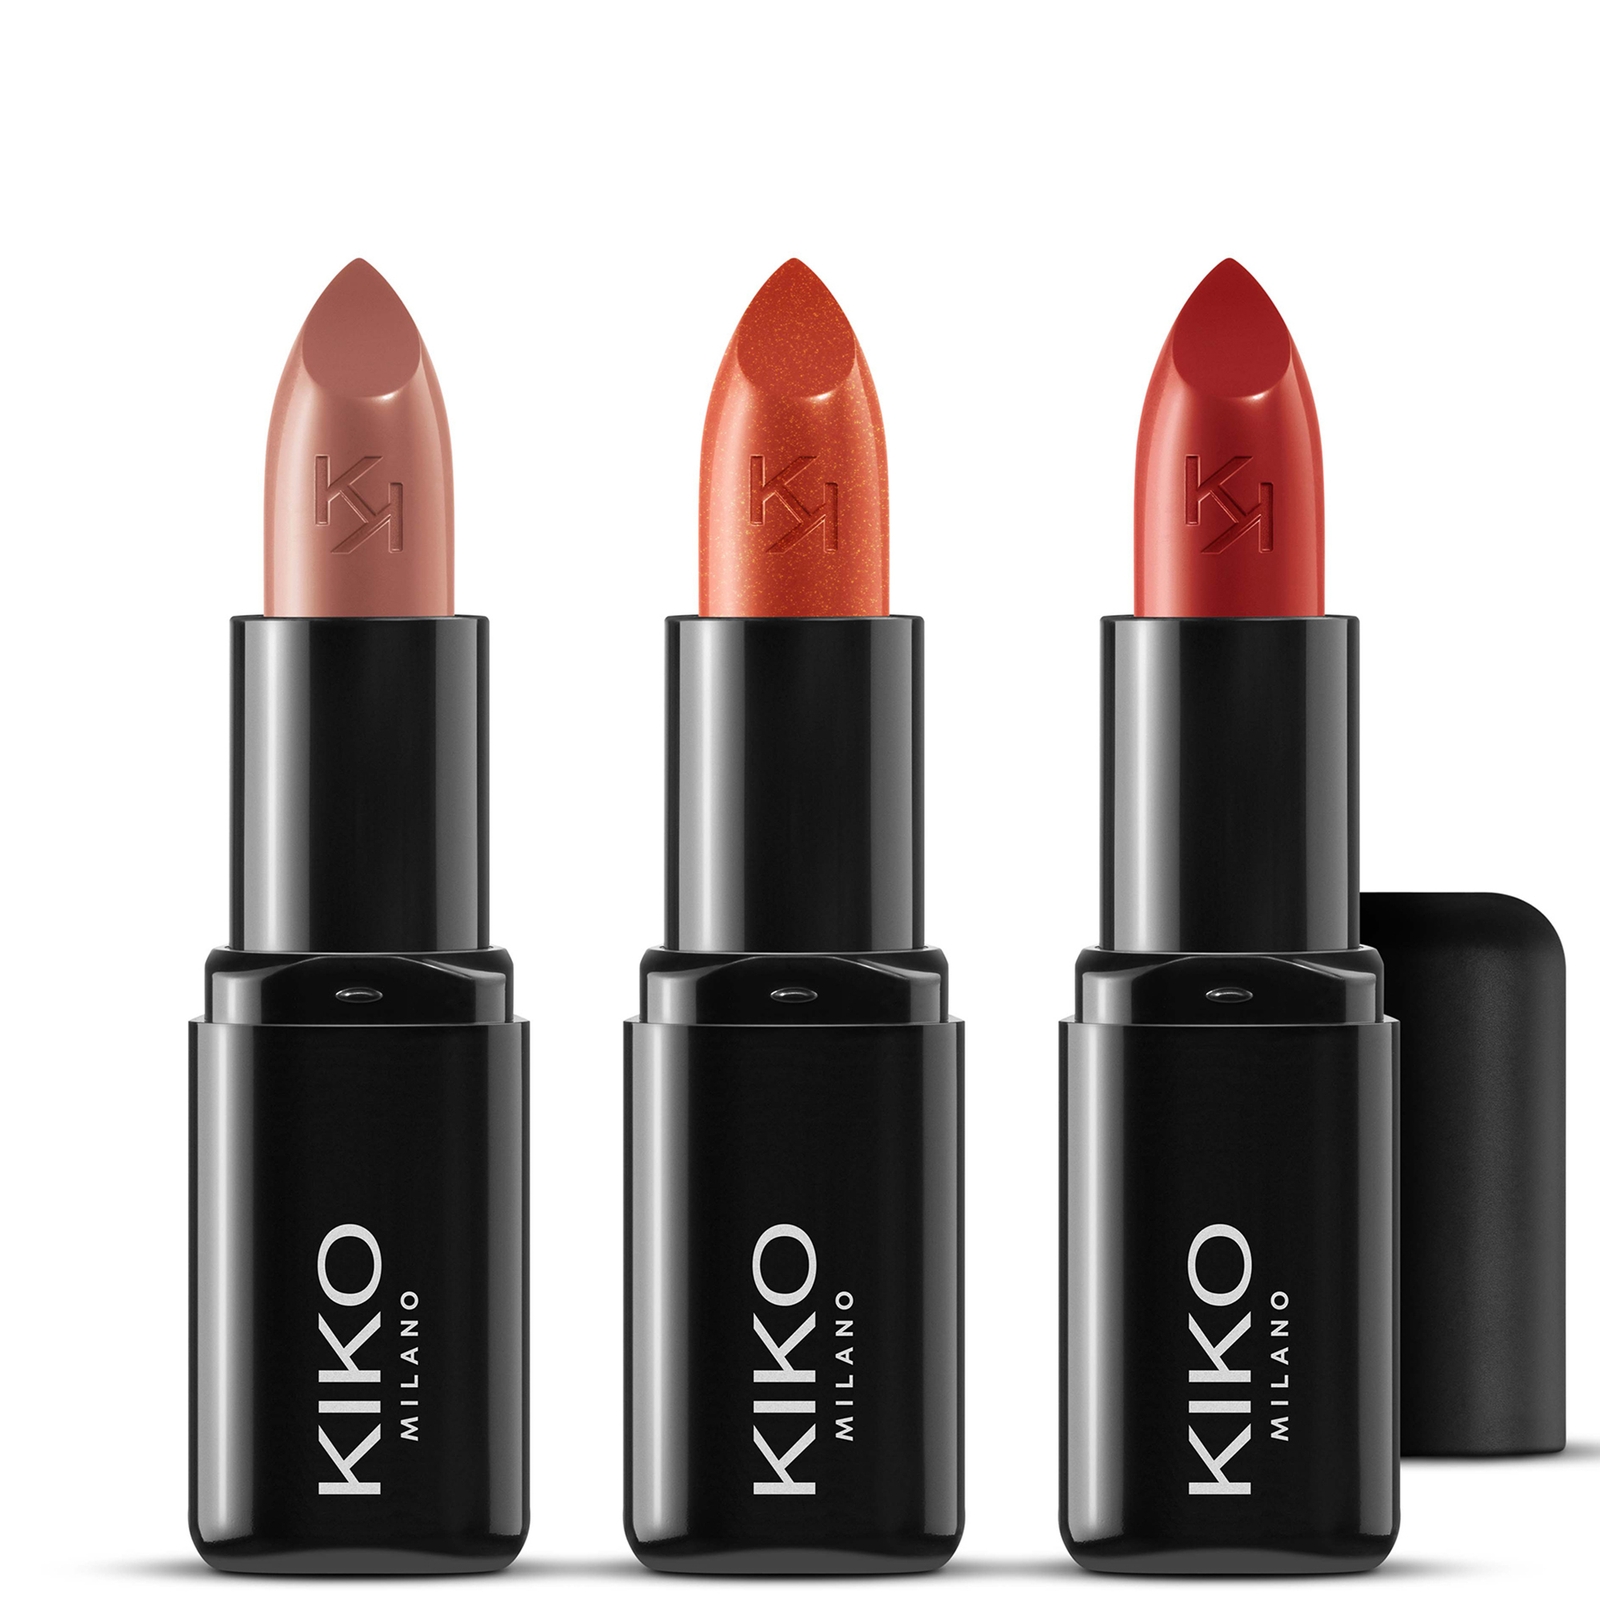 KIKO Milano Smart Fusion Lipstick Kit - All the Must Have